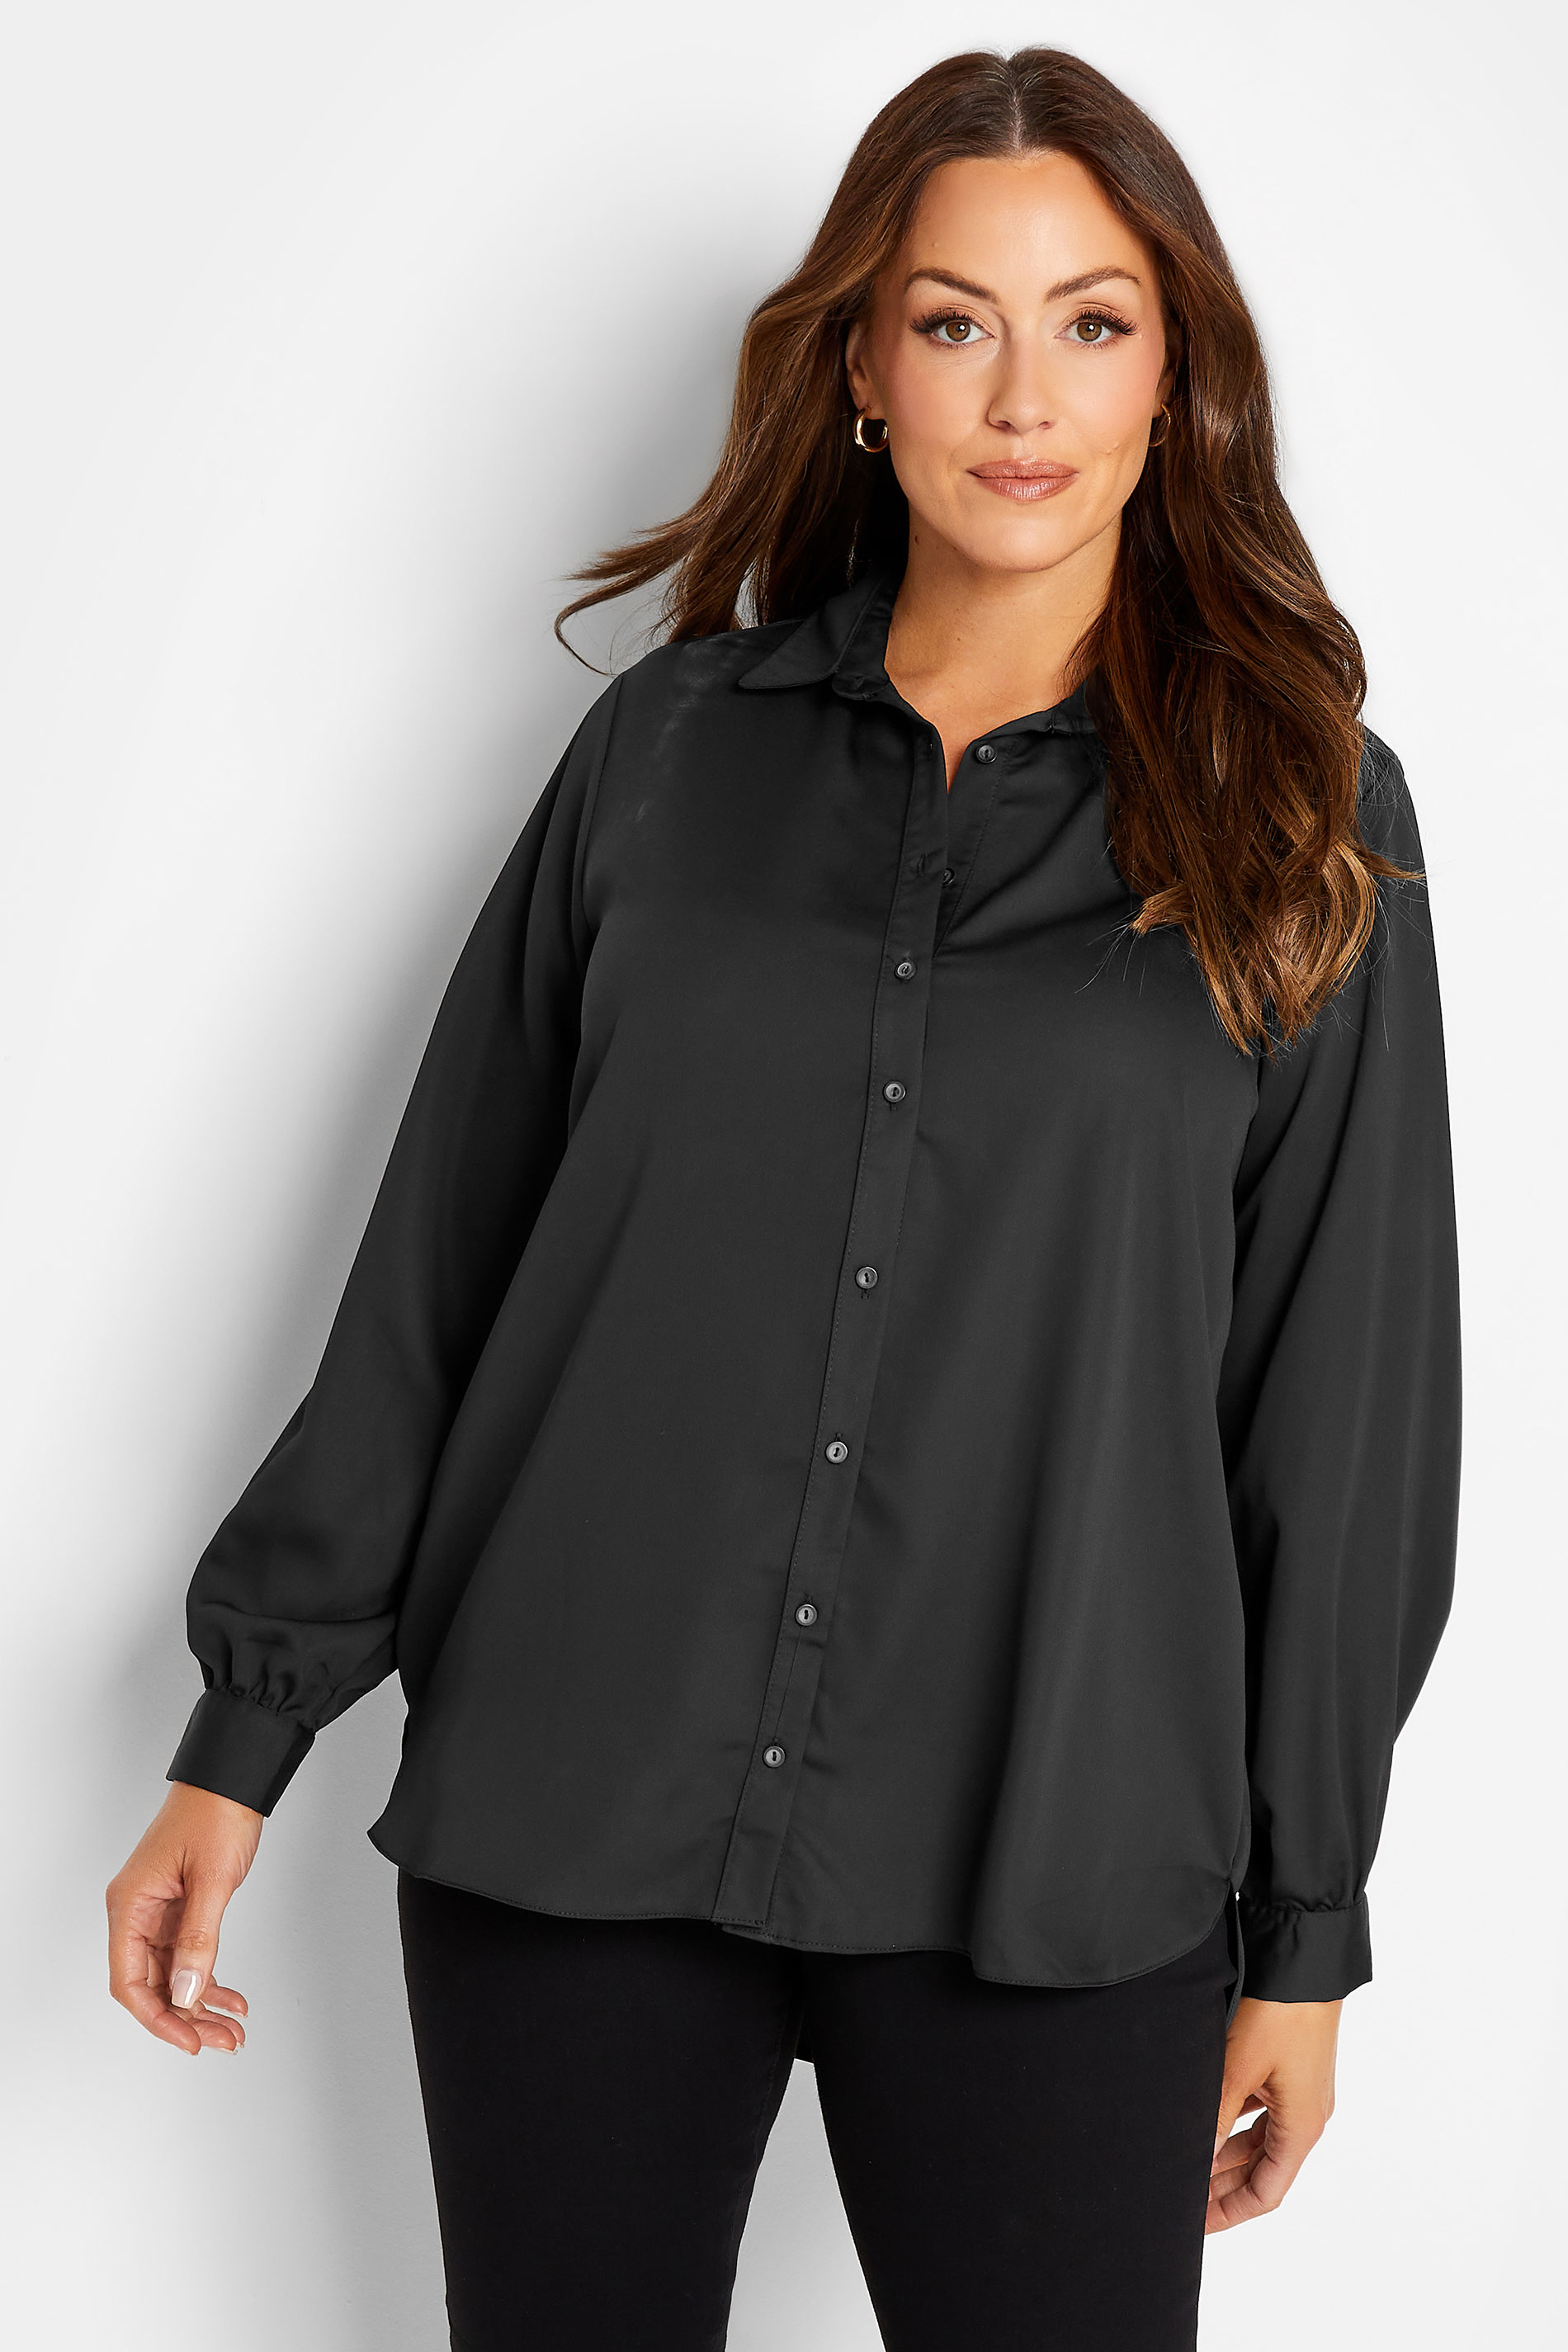 M&Co Women's Black Satin Button Through Shirt| M&Co 1